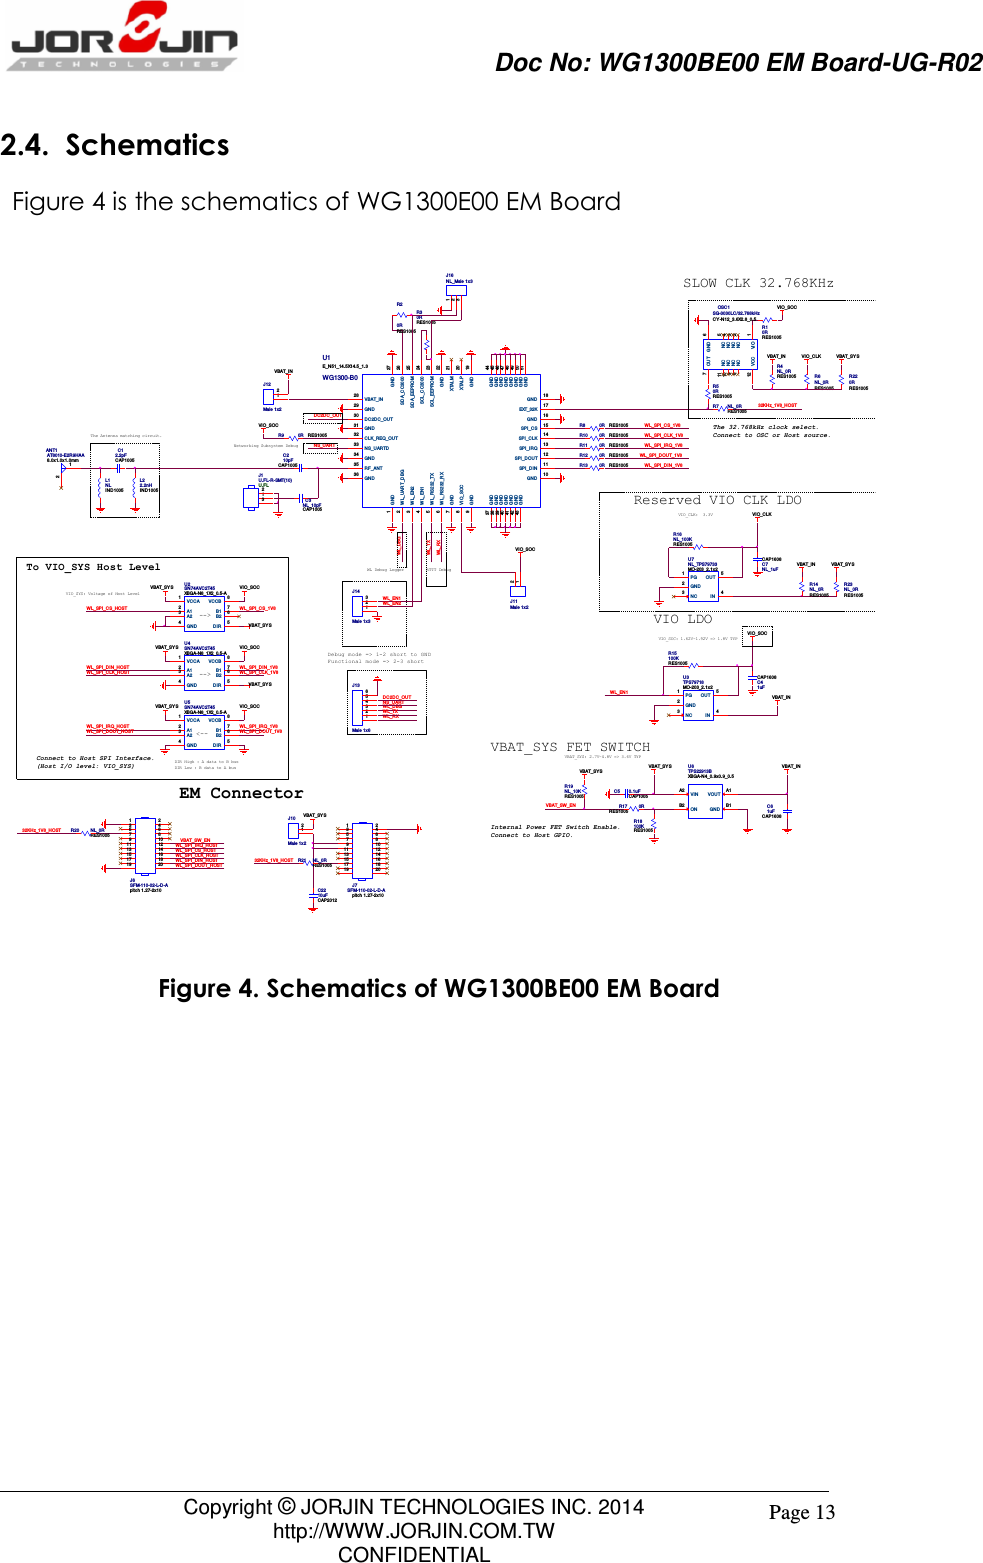                     Doc No: WG1300BE00 EM Board-UG-R02                                                                                        Copyright © JORJIN TECHNOLOGIES INC. 2014 http://WWW.JORJIN.COM.TW CONFIDENTIAL Page 13 2.4.  Schematics Figure 4 is the schematics of WG1300E00 EM Board  C7NL_1uFCAP1608R16NL_100KRES1005WL_TXVBAT_SYSR6NL_0RRES1005To VIO_SYS Host LevelWL_DBGVBAT_SYSR19NL_10KRES1005VBAT_SYSU1WG1300-B0E_N51_14.5X14.5_1.3WL_UAR T_DBG2NS_UAR TD33WL_EN14WL_EN23WL_RS232_T X5WL_RS232_R X6EXT_32K 17GND36SCL_CC 3000 24SCL_EEPROM 23SDA_CC 3000 26SDA_EEPROM 25SPI_IR Q 13SPI_DOU T 12SPI_CS 15SPI_CLK 14SPI_DI N 11RF_AN T35DC2D C_OUT30GND 27GND1GND9GND37GND38GND39GND40GND 16VBAT_IN28GND31GND7VIO_SOC8GND 19GND34GND41GND42GND43GND 51GND 50GND 49GND 48GND 44GND 45GND 46GND 47XTALM 21XTALP 20GND 18GND29GND 10GND 22CLK_REQ_OU T32R23NL_0RRES1005VBAT_SYS: 2.7V~4.8V =&gt; 3.6V TYPVBAT_SYSVBAT_SW_ENVIO_SOC: 1.62V~1.92V =&gt; 1.8V TYPWL_RXWL_DBGWL_TXC3NL_10pFCAP1005J1U.F L-R-SMT(10)U.FL123L22.2nHIND 1005C12.2pFCAP1005L1NLIND 1005C210pFCAP1005WL_EN1ANT1AT8010-E2R9HAA8.0x1. 0x1.0mm12VIO_CLKThe Antenna matching circuit.VBAT_INVBAT_INU2SN74AVC2T45XBGA-N8_1X2_0. 5-AVCCA1A12A23GND4VCCB 8B1 7B2 6DIR 5VIO_SOCVIO LDONS_UAR TU4SN74AVC2T45XBGA-N8_1X2_0. 5-AVCCA1A12A23GND4VCCB 8B1 7B2 6DIR 5R17 0RRES1005WL_SPI_I RQ_1V8WL_SPI_D OUT_1V8U5SN74AVC2T45XBGA-N8_1X2_0. 5-AVCCA1A12A23GND4VCCB 8B1 7B2 6DIR 5WL_SPI_C S_1V8U6TPS22913BXBGA-N4_0.9x0.9_0. 5VINA2 VOUT A1ONB2 GND B1VBAT_INU3TPS79718MO-203_2.1x2GND2NC3IN 4OUT 5PG1R9 0R RES1005VIO_SYS: Voltage of Host LevelWL_SPI_I RQ_HOSTWL_SPI_D OUT_HOST--&gt;C61uFCAP1608R18100KRES1005--&gt;VIO_SOCC41uFCAP1608--&gt;DIR High : A data to B busDIR Low : B data to A busVBAT_SYSR15100KRES1005VBAT_SYSC5 0.1uFCAP1005WL_SPI_C LK_HOSTWL_SPI_D IN_HOSTWL_SPI_C S_HOSTVBAT_SYS FET SWITCHWL_SPI_C LK_1V8WL_SPI_D IN_1V8WL_EN1DC2D C_OUTR30RRES1005J14Male 1x3123RTTT DebugVIO_SOCNetworking Subsystem DebugNS_UAR TDC2D C_OUTWL Debug LoggerR4NL_0RRES1005VBAT_INVIO_SOCR10RRES100532KHz_1V8_HOSTR7 NL_0RRES1005SLOW CLK 32.768KHzOSC1SG-3030LC/32. 768kHzCY -N12_3.6X2.8_0.5VIO 1VCC12OUT7GND 6NC 2NC 3NC 4NC 5NC8NC9NC10 NC11R20RRES1005J10Male 1x212Connect to Host SPI Interface.(Host I/O level: VIO_SYS)Internal Power FET Switch Enable.Connect to Host GPIO.VIO_SOCThe 32.768kHz clock select.Connect to OSC or Host source. J16NL_Male 1x3123R14NL_0RRES1005VIO_SOCC2210uFCAP2012J11Male 1x212Debug mode =&gt; 1-2 short to GNDFunctional mode =&gt; 2-3 shortWL_EN2VIO_SOCEM ConnectorJ12Male 1x212WL_SPI_C S_1V8R8 0R RES1005R11 0R RES1005 W L_SPI_IRQ_1V8R10 0R RES1005 W L_SPI_CLK_1V8R13 0R RES1005 W L_SPI_DIN_1V8R12 0R RES1005 W L_SPI_DOUT_1V8VBAT_SYSR21 NL_0RRES100532KHz_1V8_HOST32KHz_1V8_HOST R20 N L_0RRES1005WL_SPI_D IN_HOSTWL_SPI_C LK_HOSTVBAT_SW_ENWL_SPI_C S_HOSTWL_SPI_D OUT_HOSTWL_SPI_I RQ_HOSTJ6SFM-110-02-L-D-Apitch  1.27-2x101357911131517192468101214161820R50RRES1005VBAT_SYSJ7SFM-110-02-L-D-Apitch  1.27-2x101357911131517192468101214161820R220RRES1005J13Male 1x6123456VBAT_SYSVBAT_SYSVIO_CLK:  3.3VVBAT_INReserved VIO CLK LDOVIO_CLKWL_RXU7NL_TPS79733MO-203_2.1x2GND2NC3IN 4OUT 5PG1  Figure 4. Schematics of WG1300BE00 EM Board               